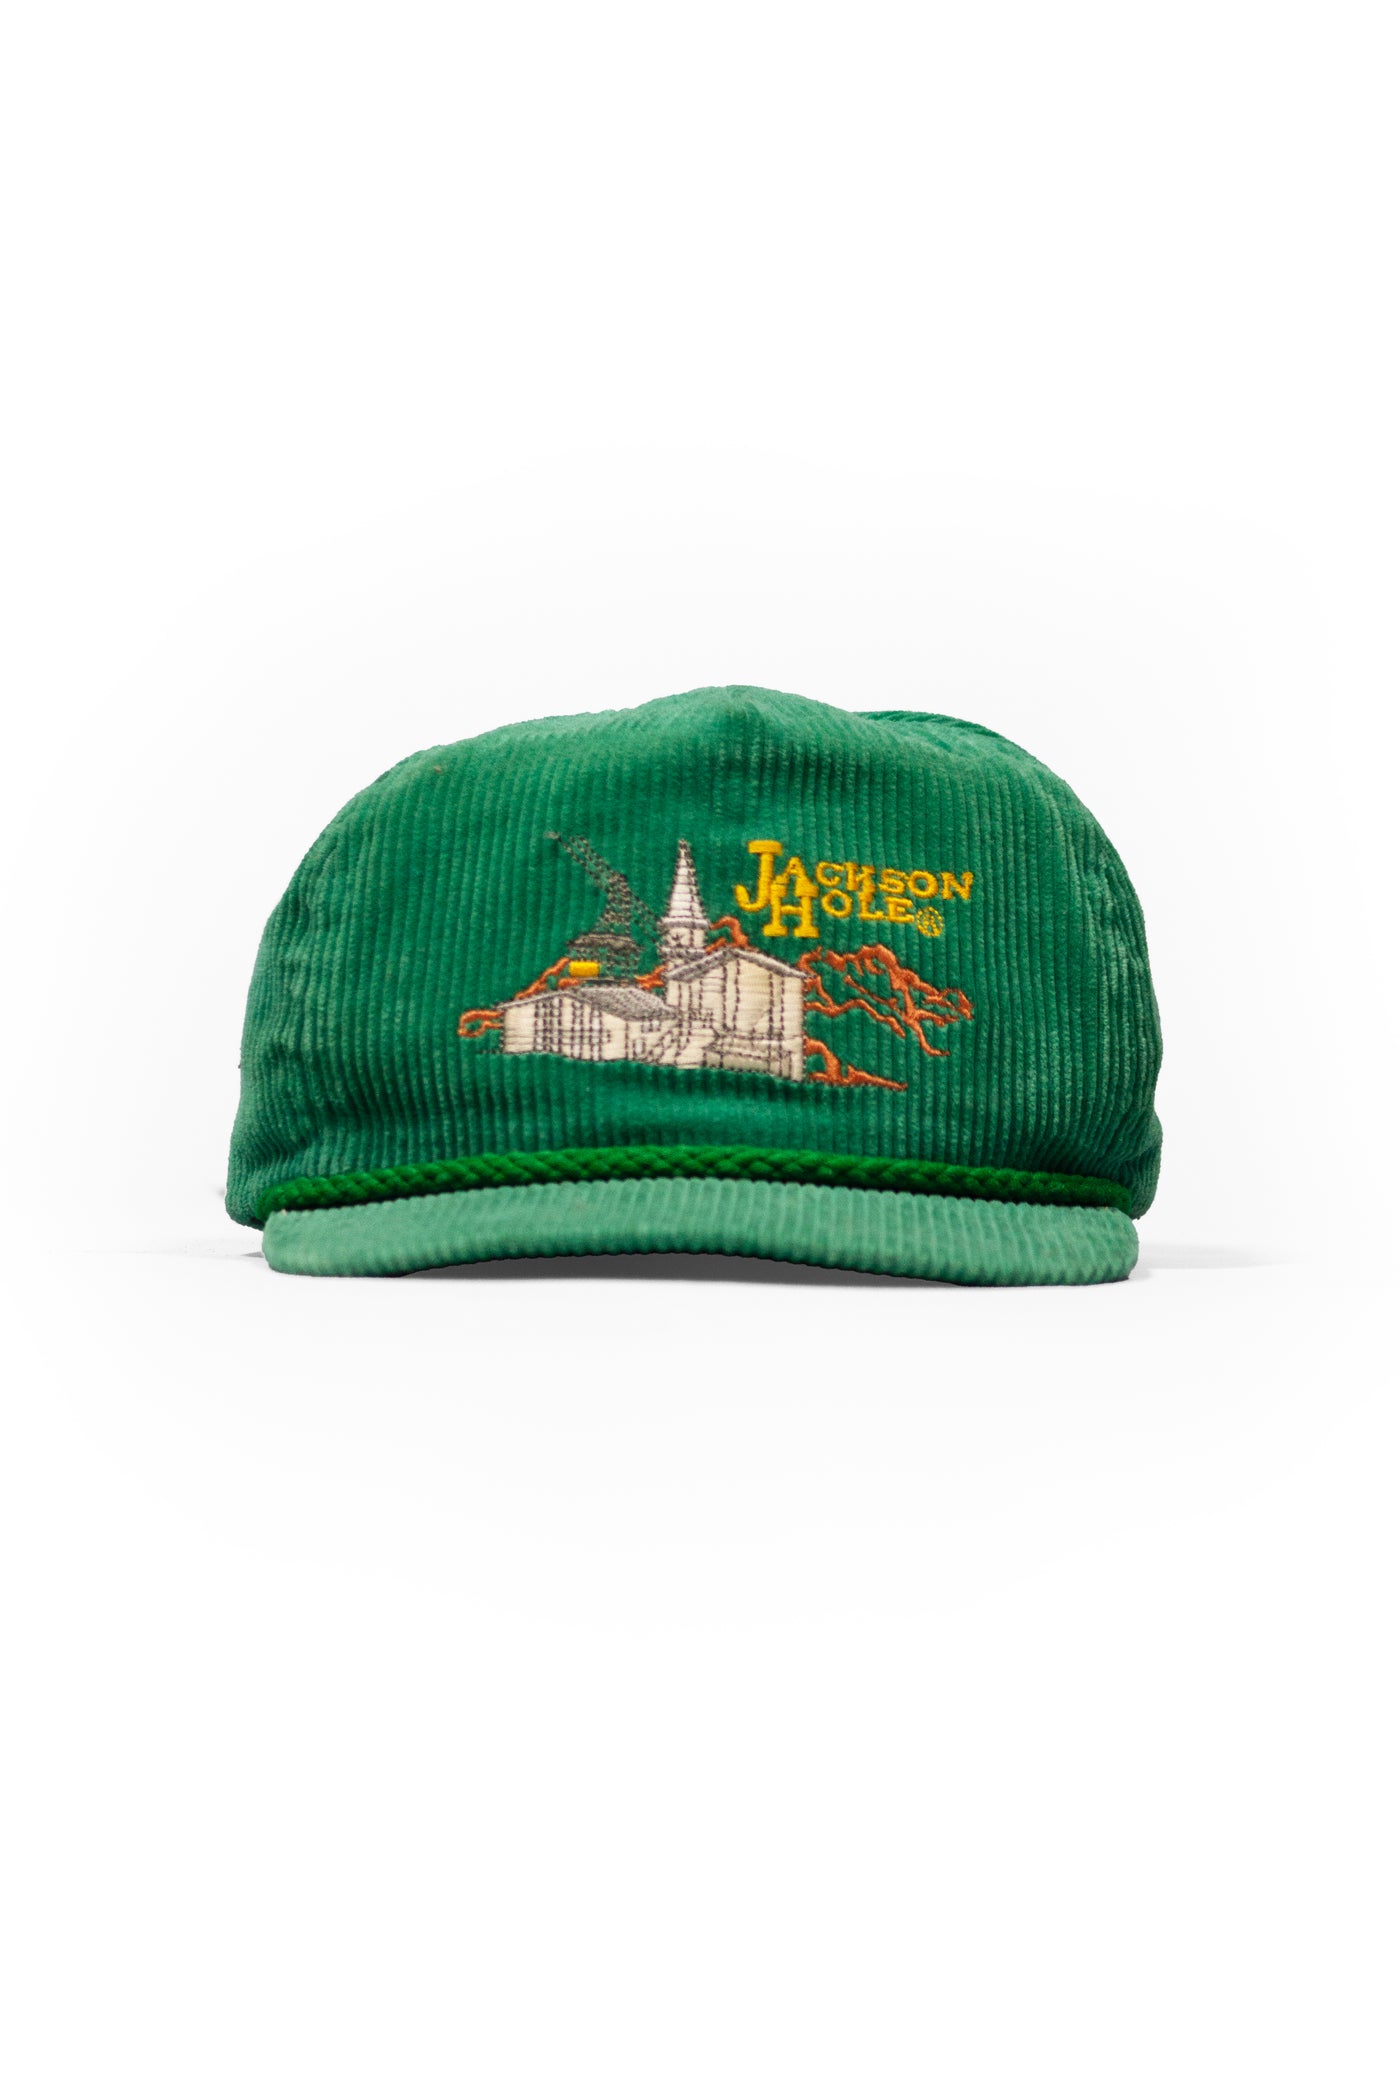 Vintage 90s Corduroy Jackson Hole Strap-Back Hat